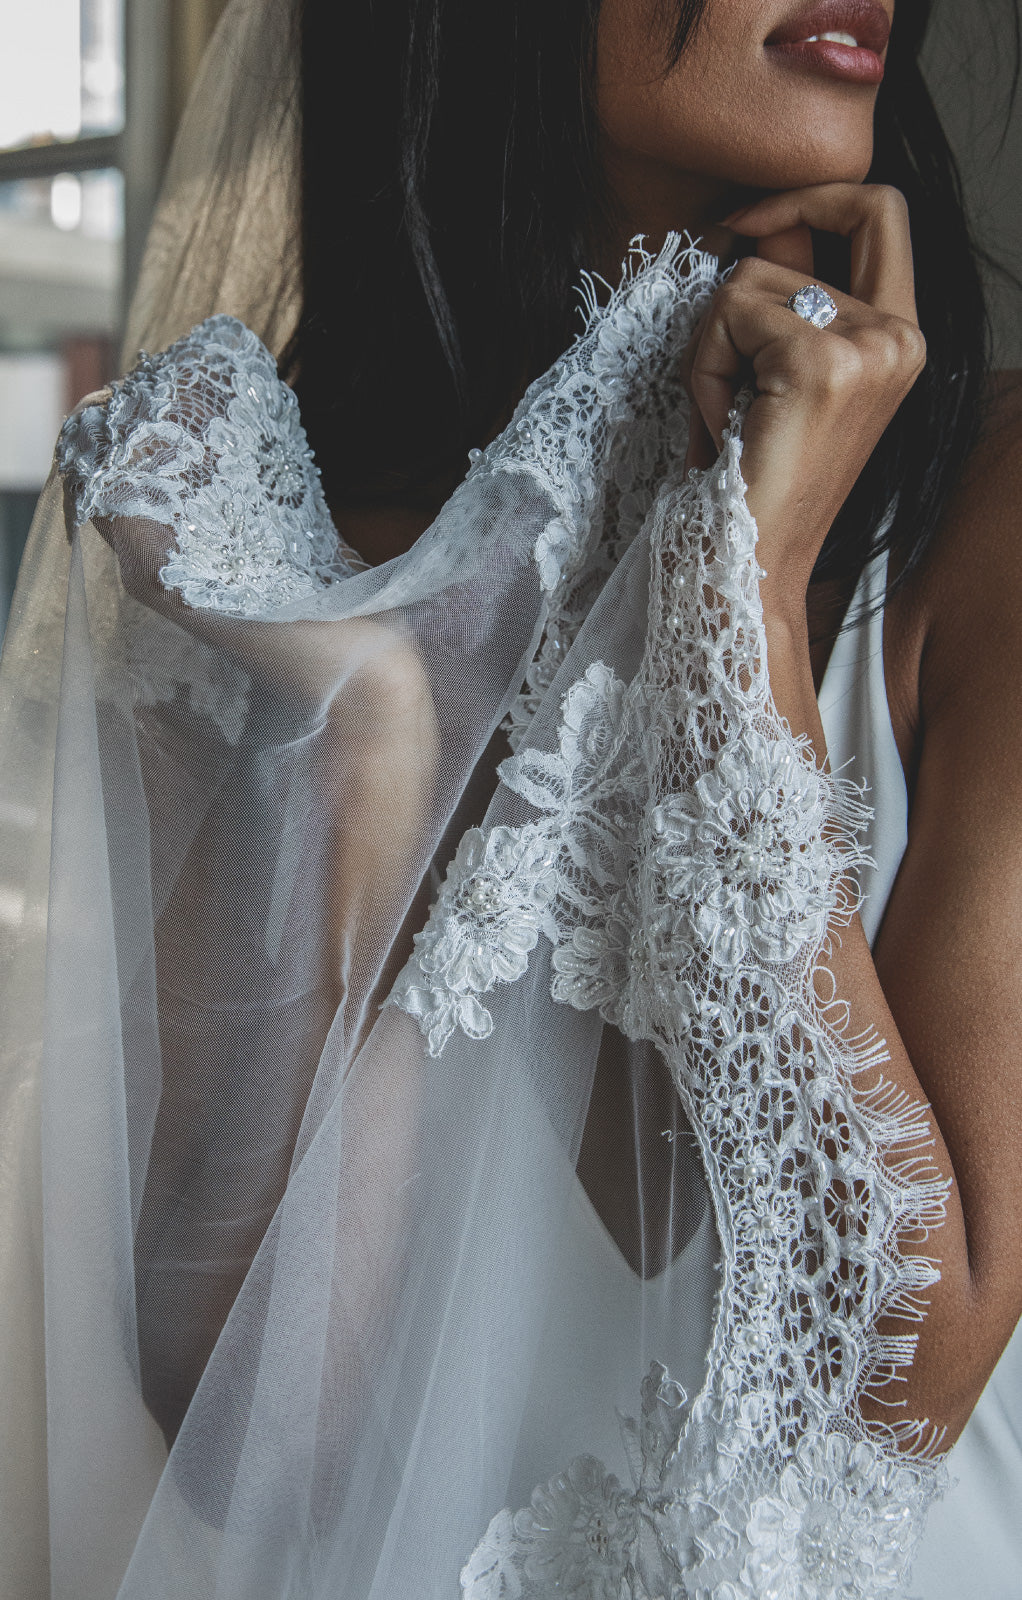 Jamie Lace Wedding Veil - Daphne Newman Design